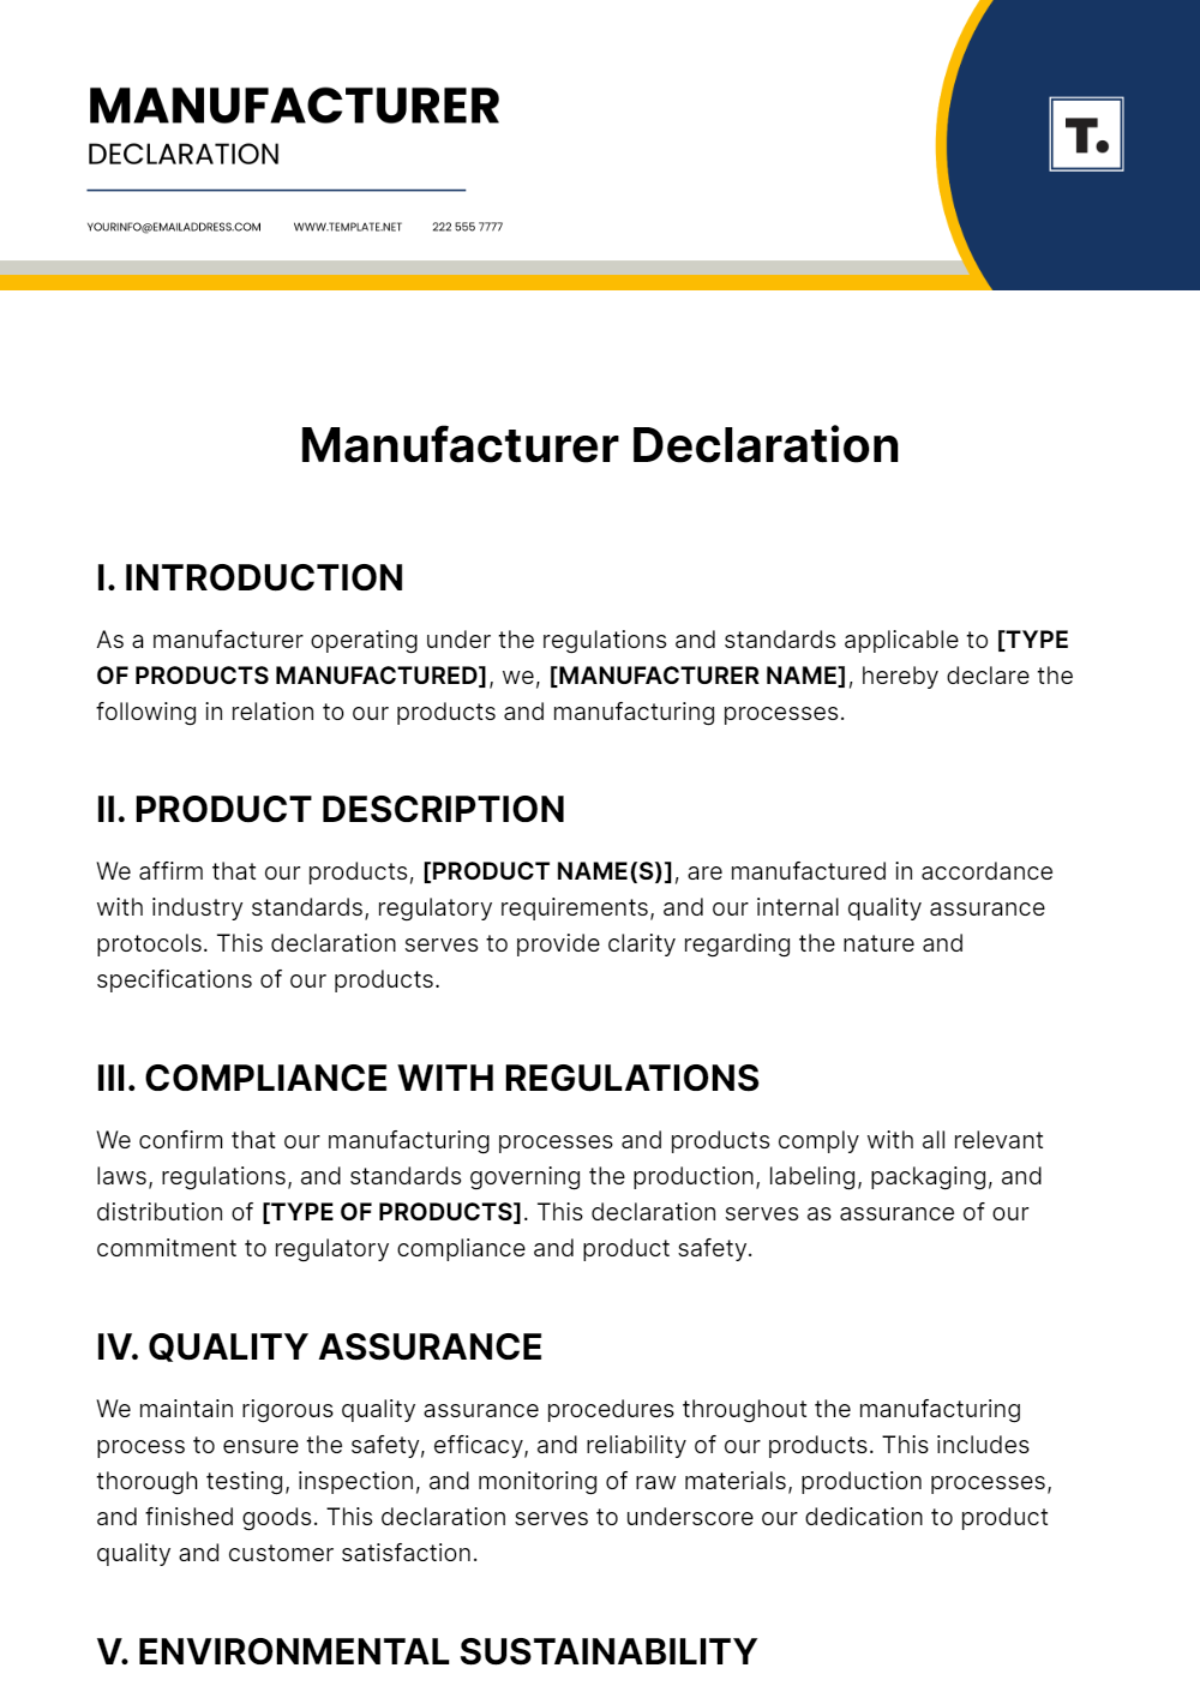 Manufacturer Declaration Template